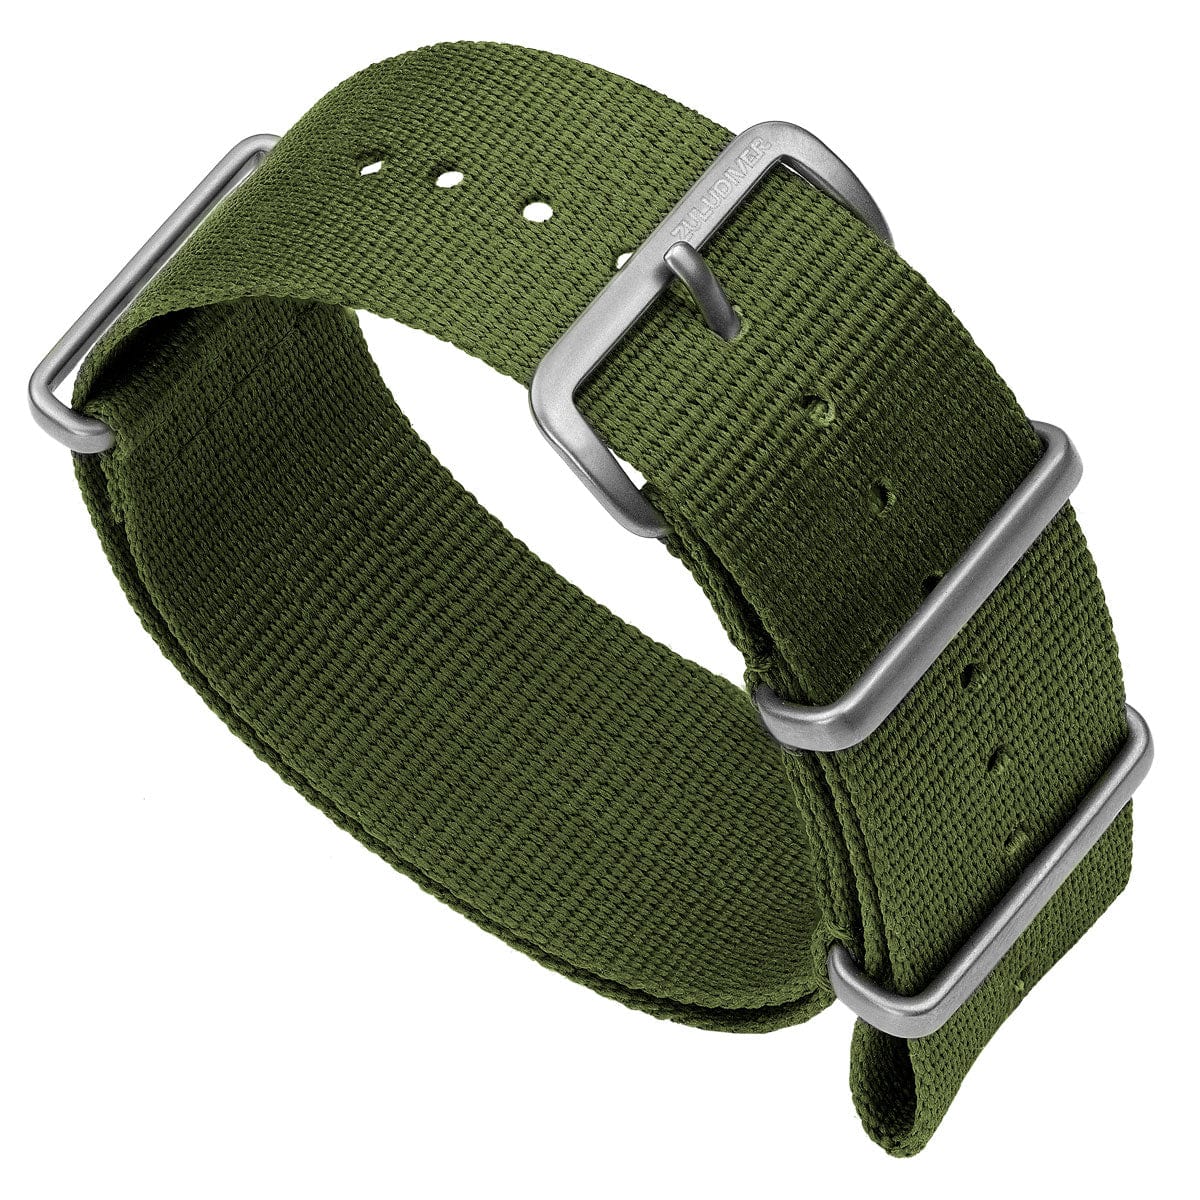 ZULUDIVER 1973 British Military Watch Strap: CADET - Army Green - Sati